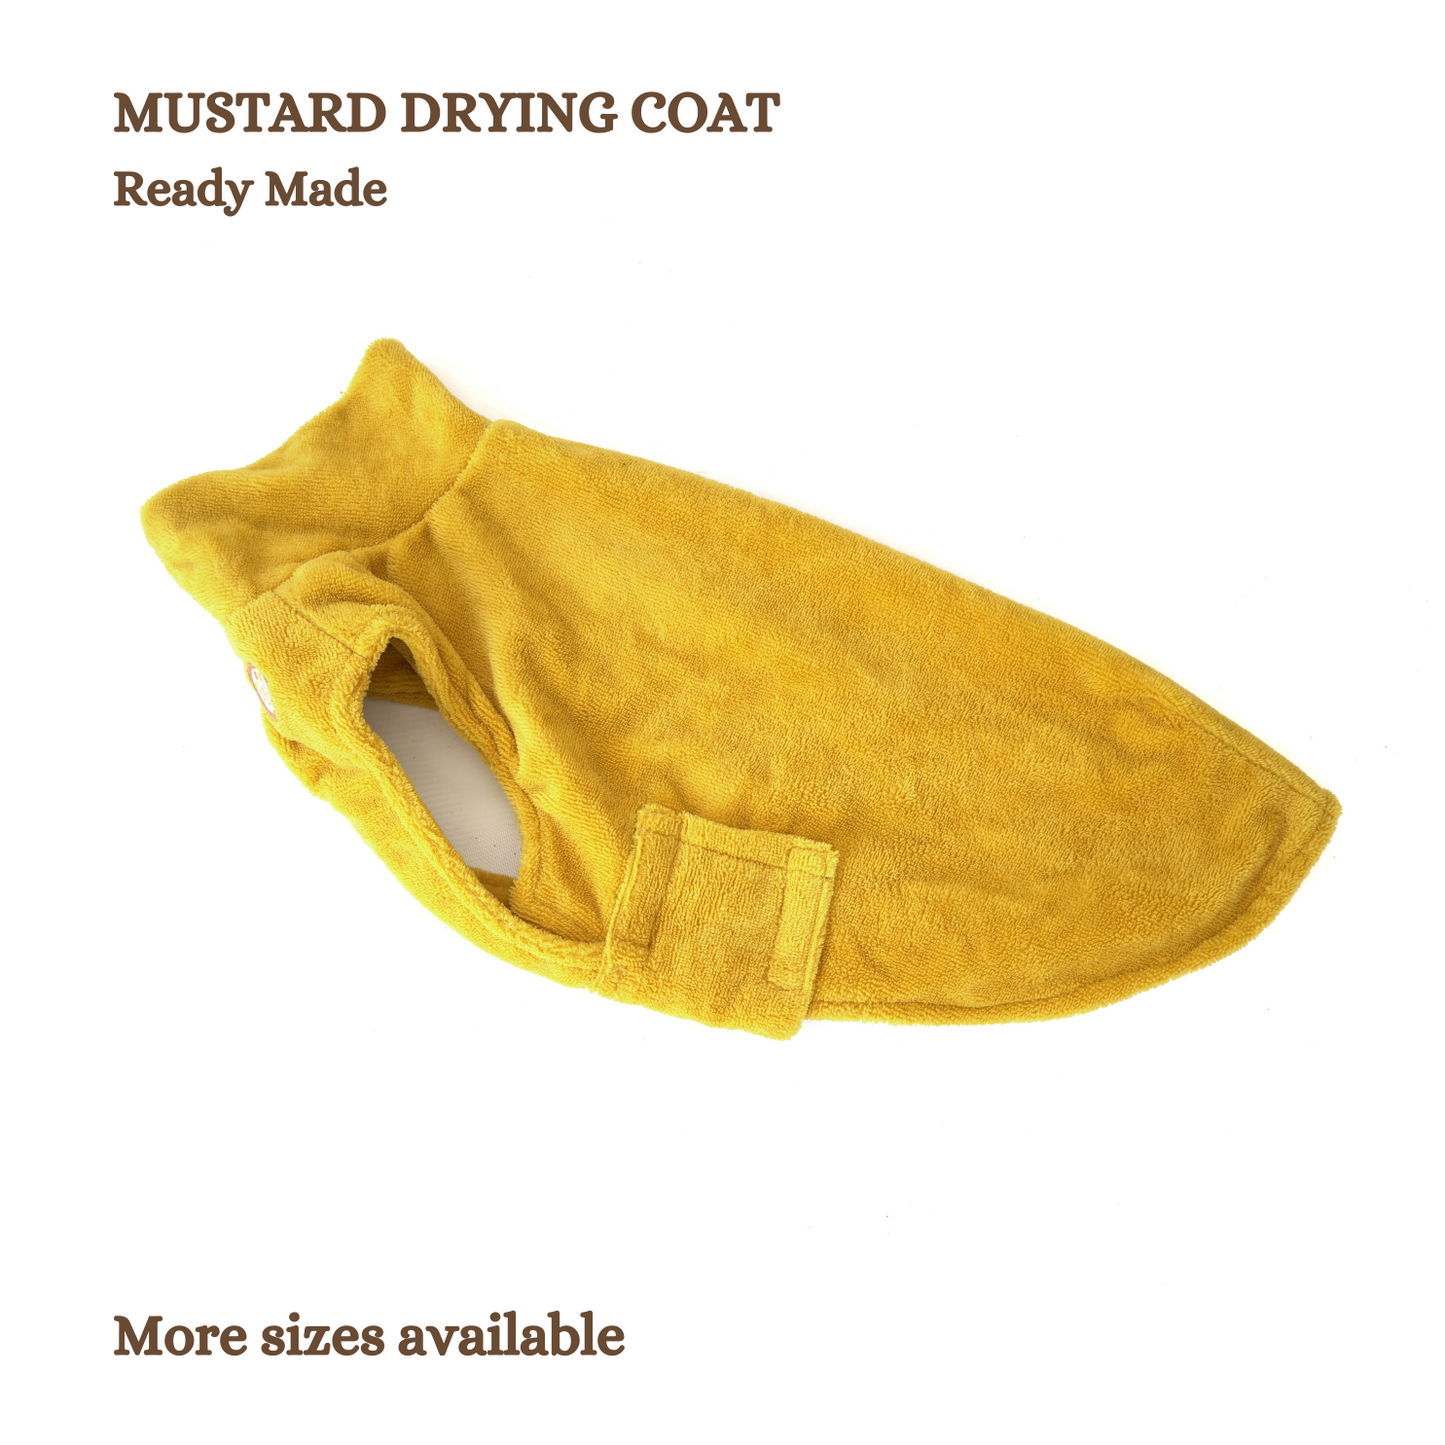 Mustard Drying coats